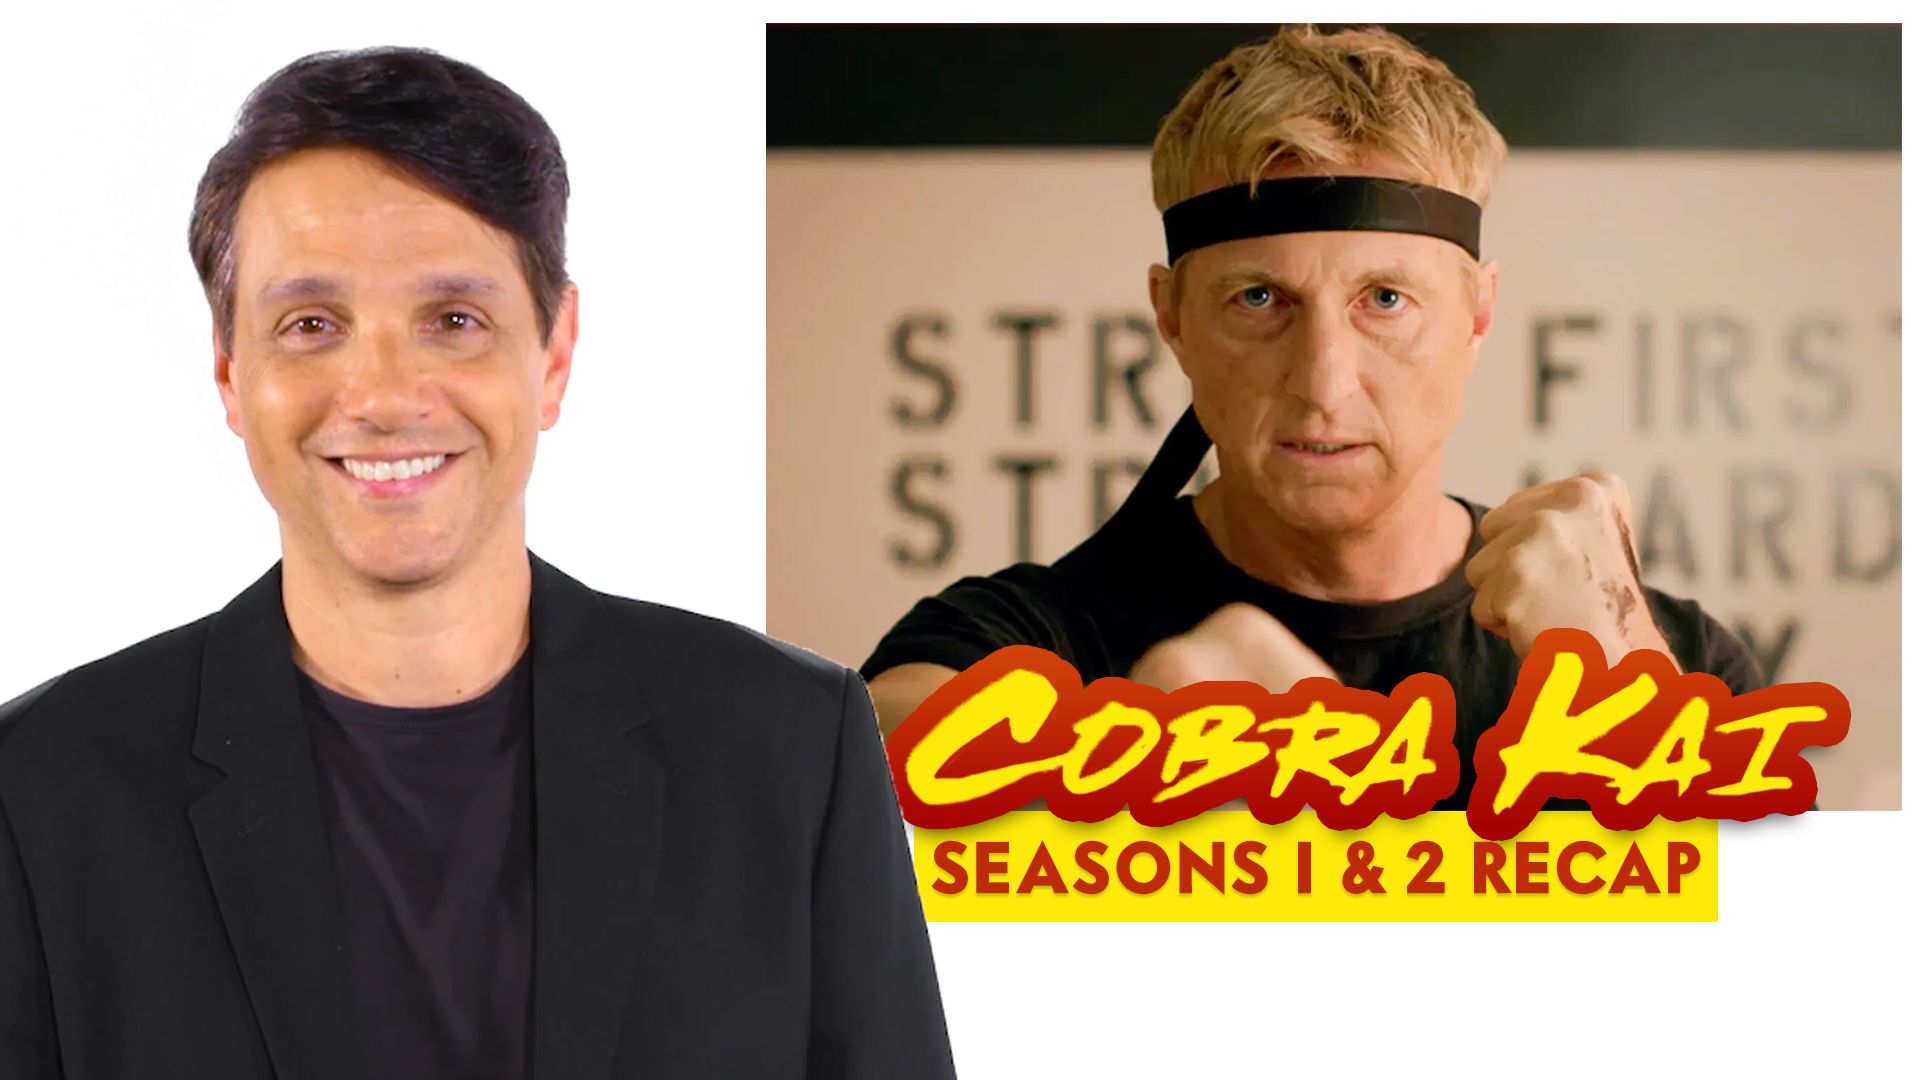 Cobra Kai' Cast Returns for Season 5 Kick It or Keep It